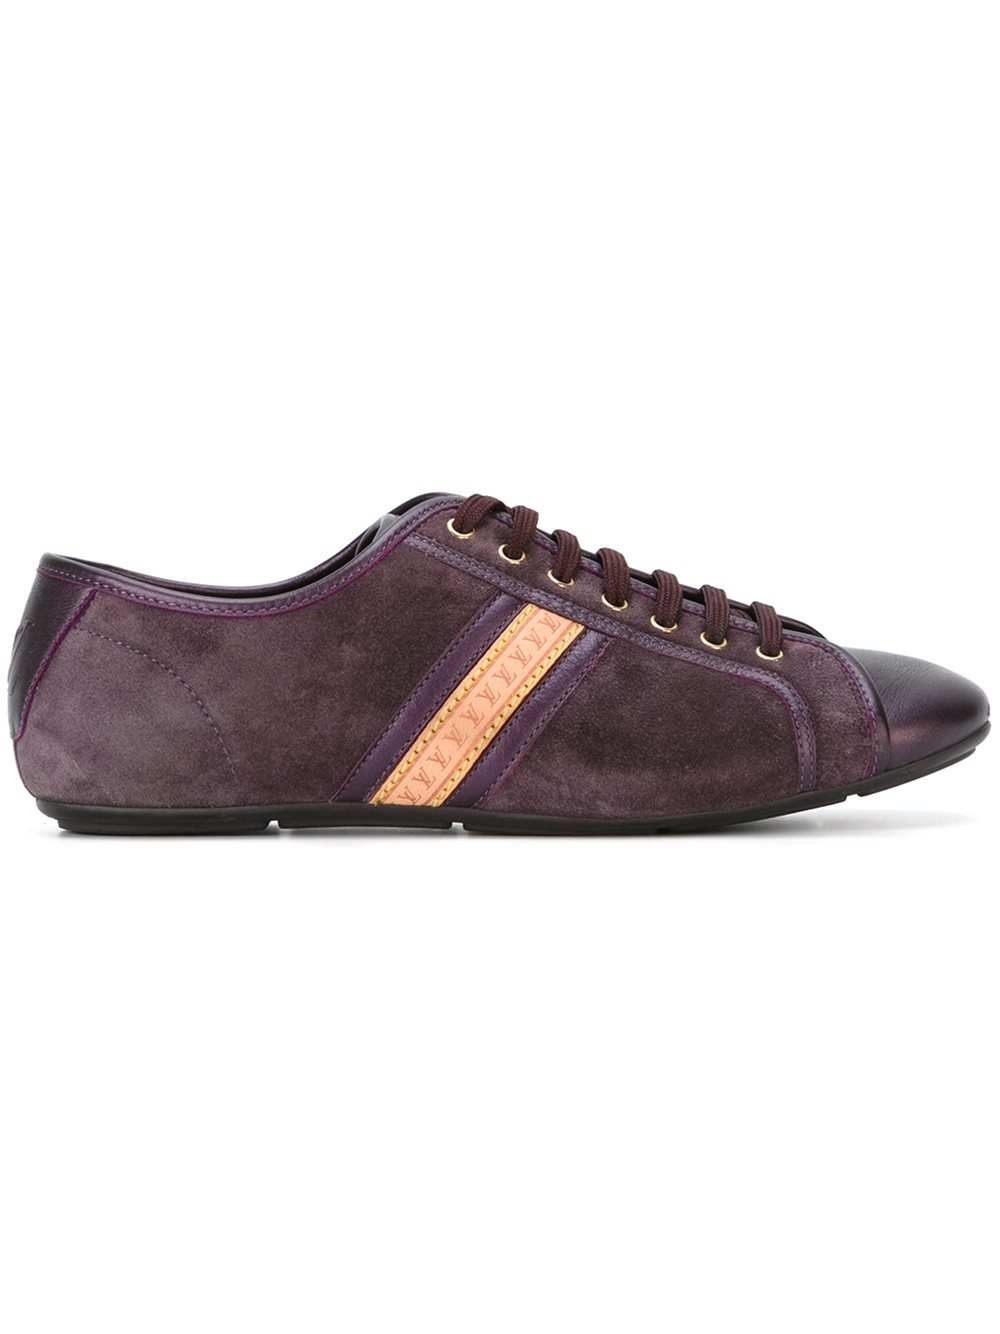 Louis Vuitton Vintage Logo Stripe Suede Sneakers in Purple for Men